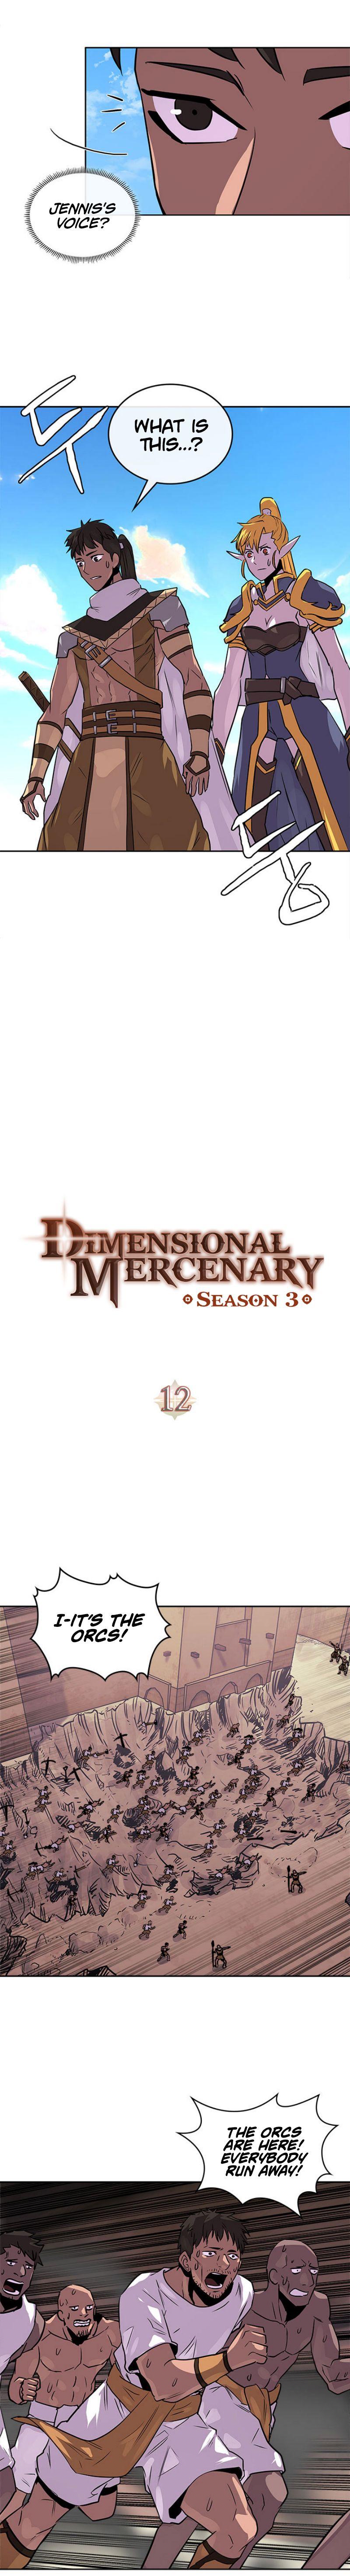 dimensional_mercenary_76_2